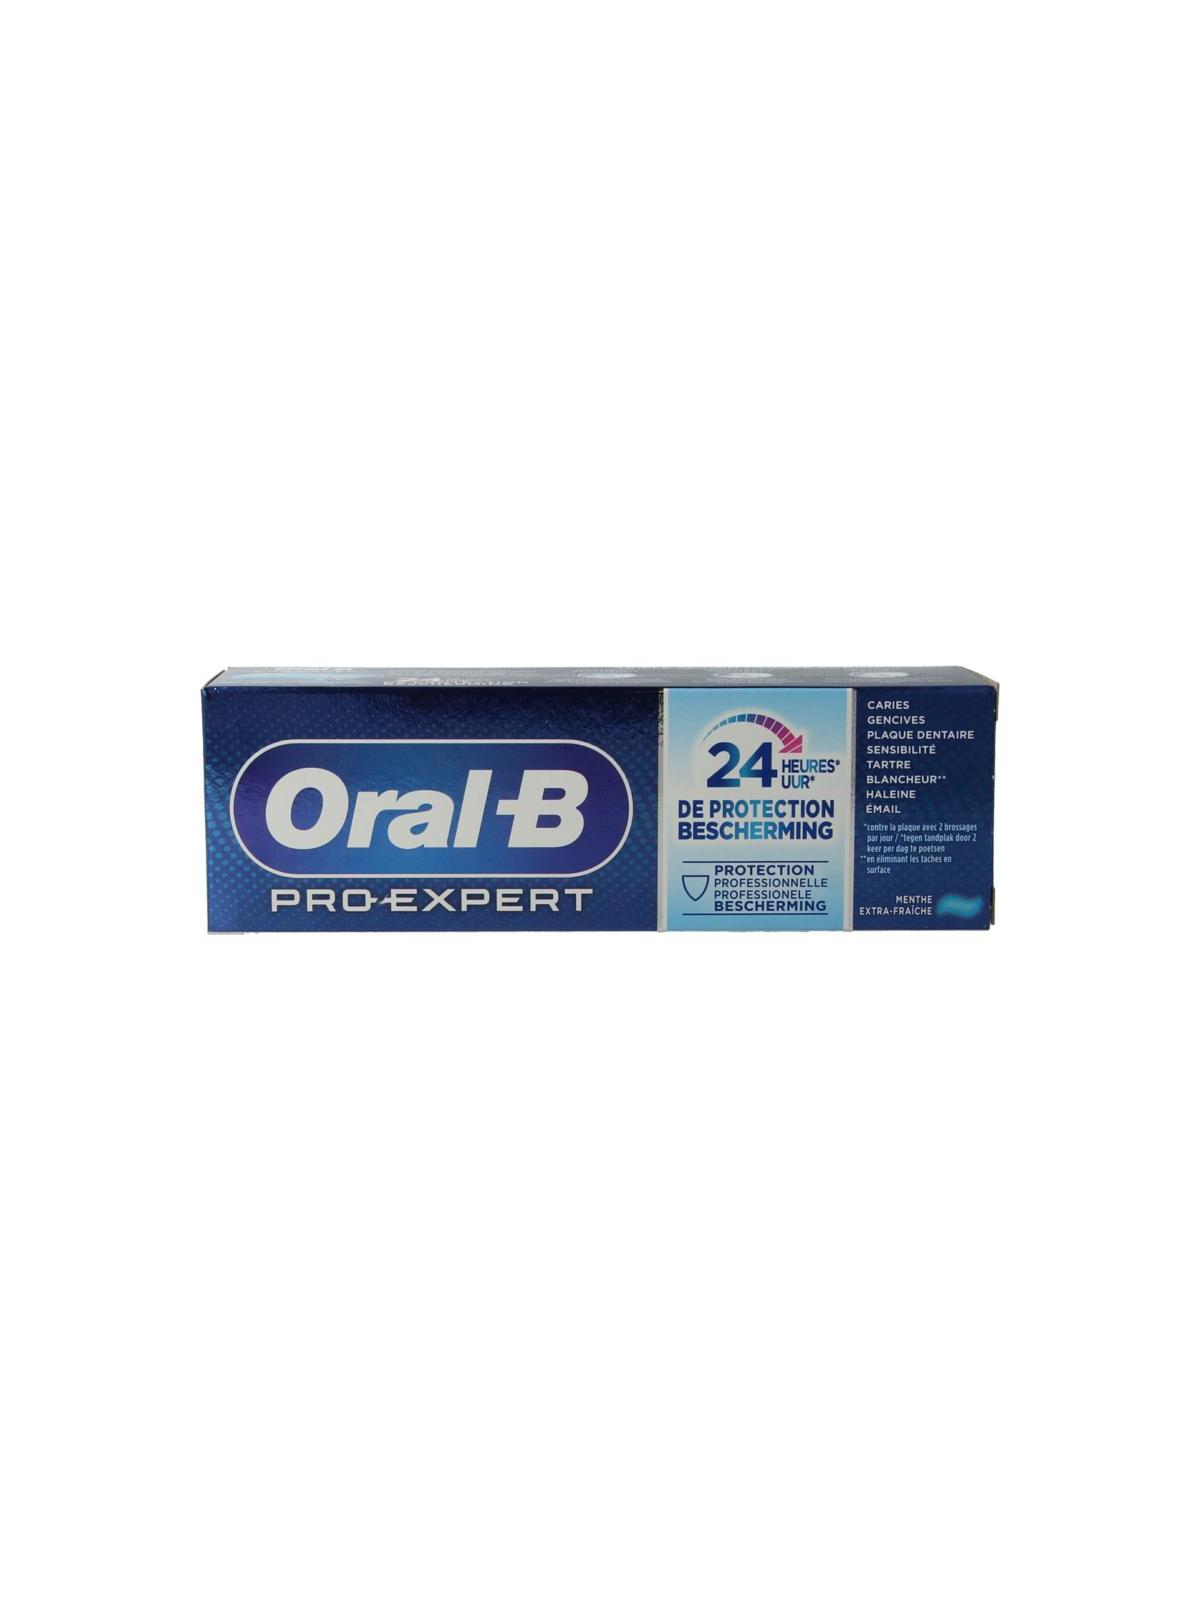 Oral B Tandpasta pro-expert bescherming